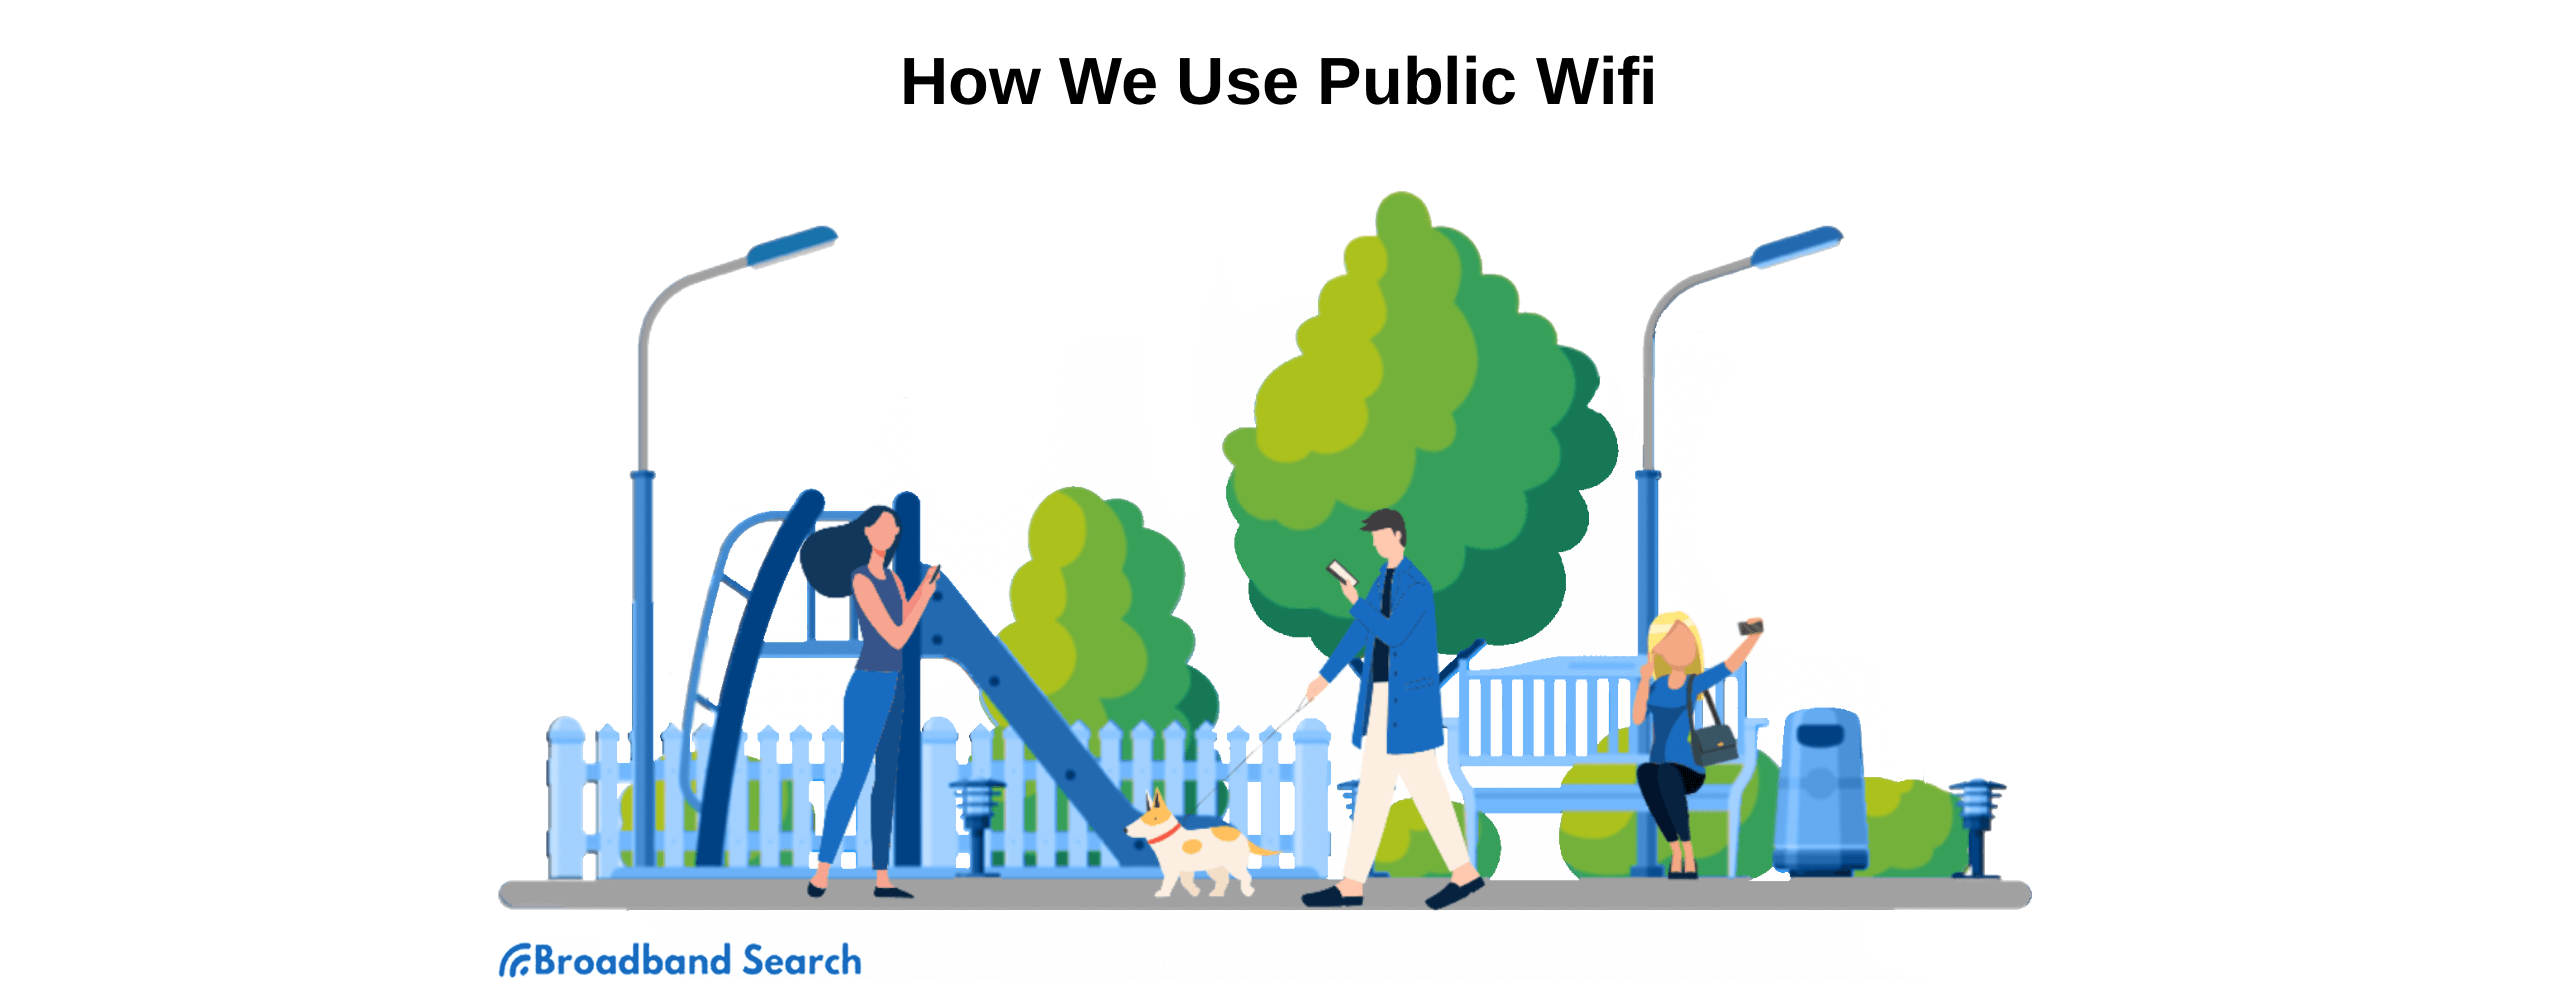 How we use public wifi